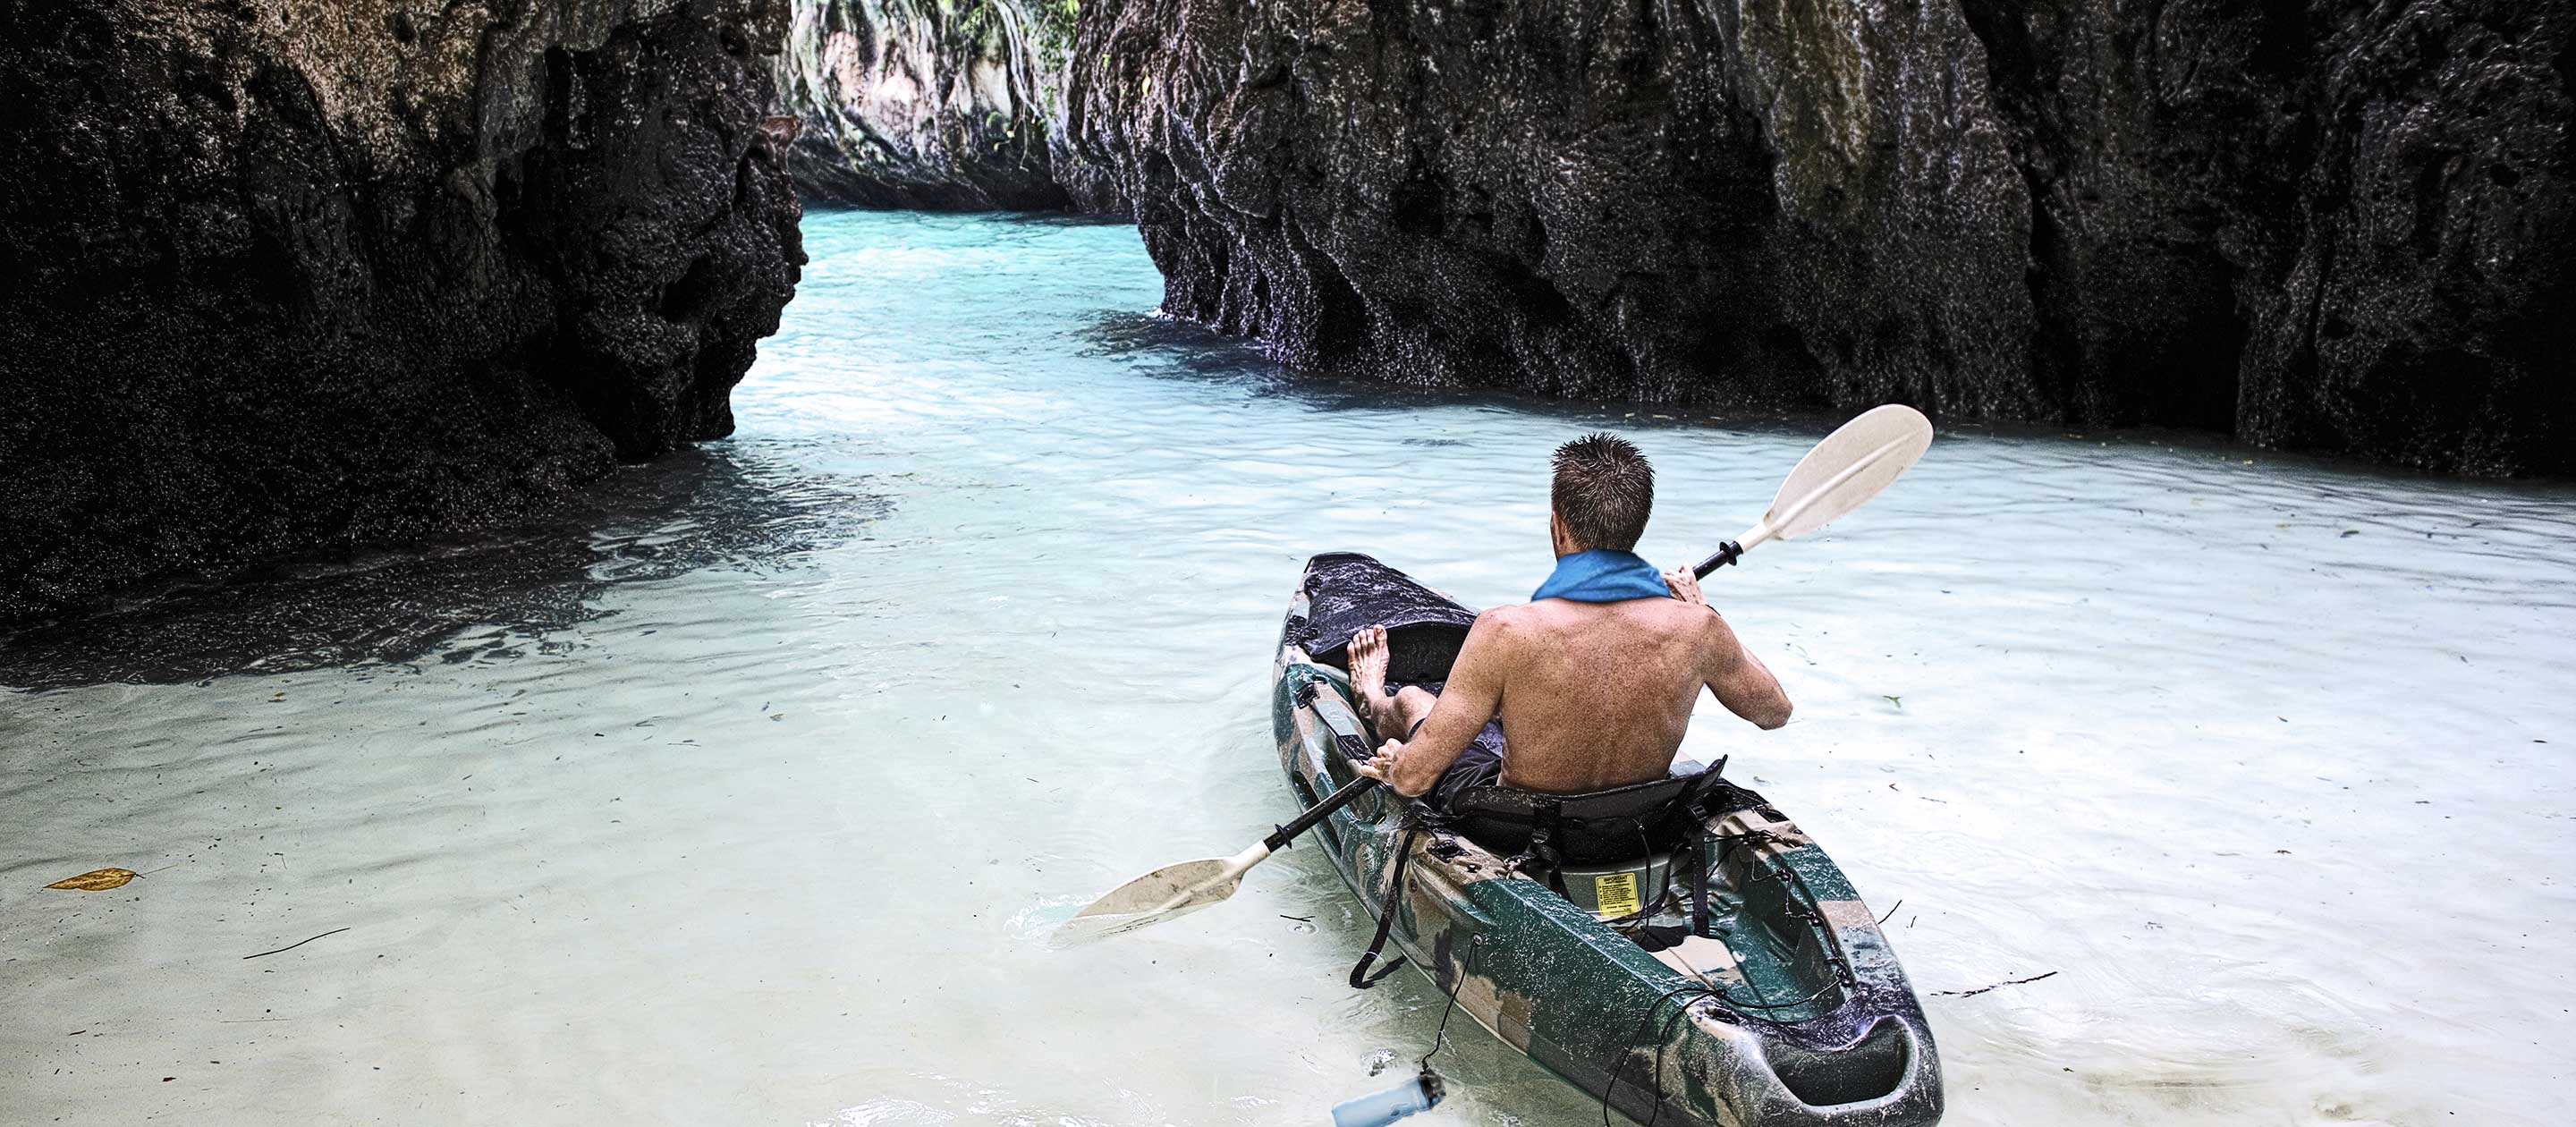 Photo: Guy in kayak in a cove